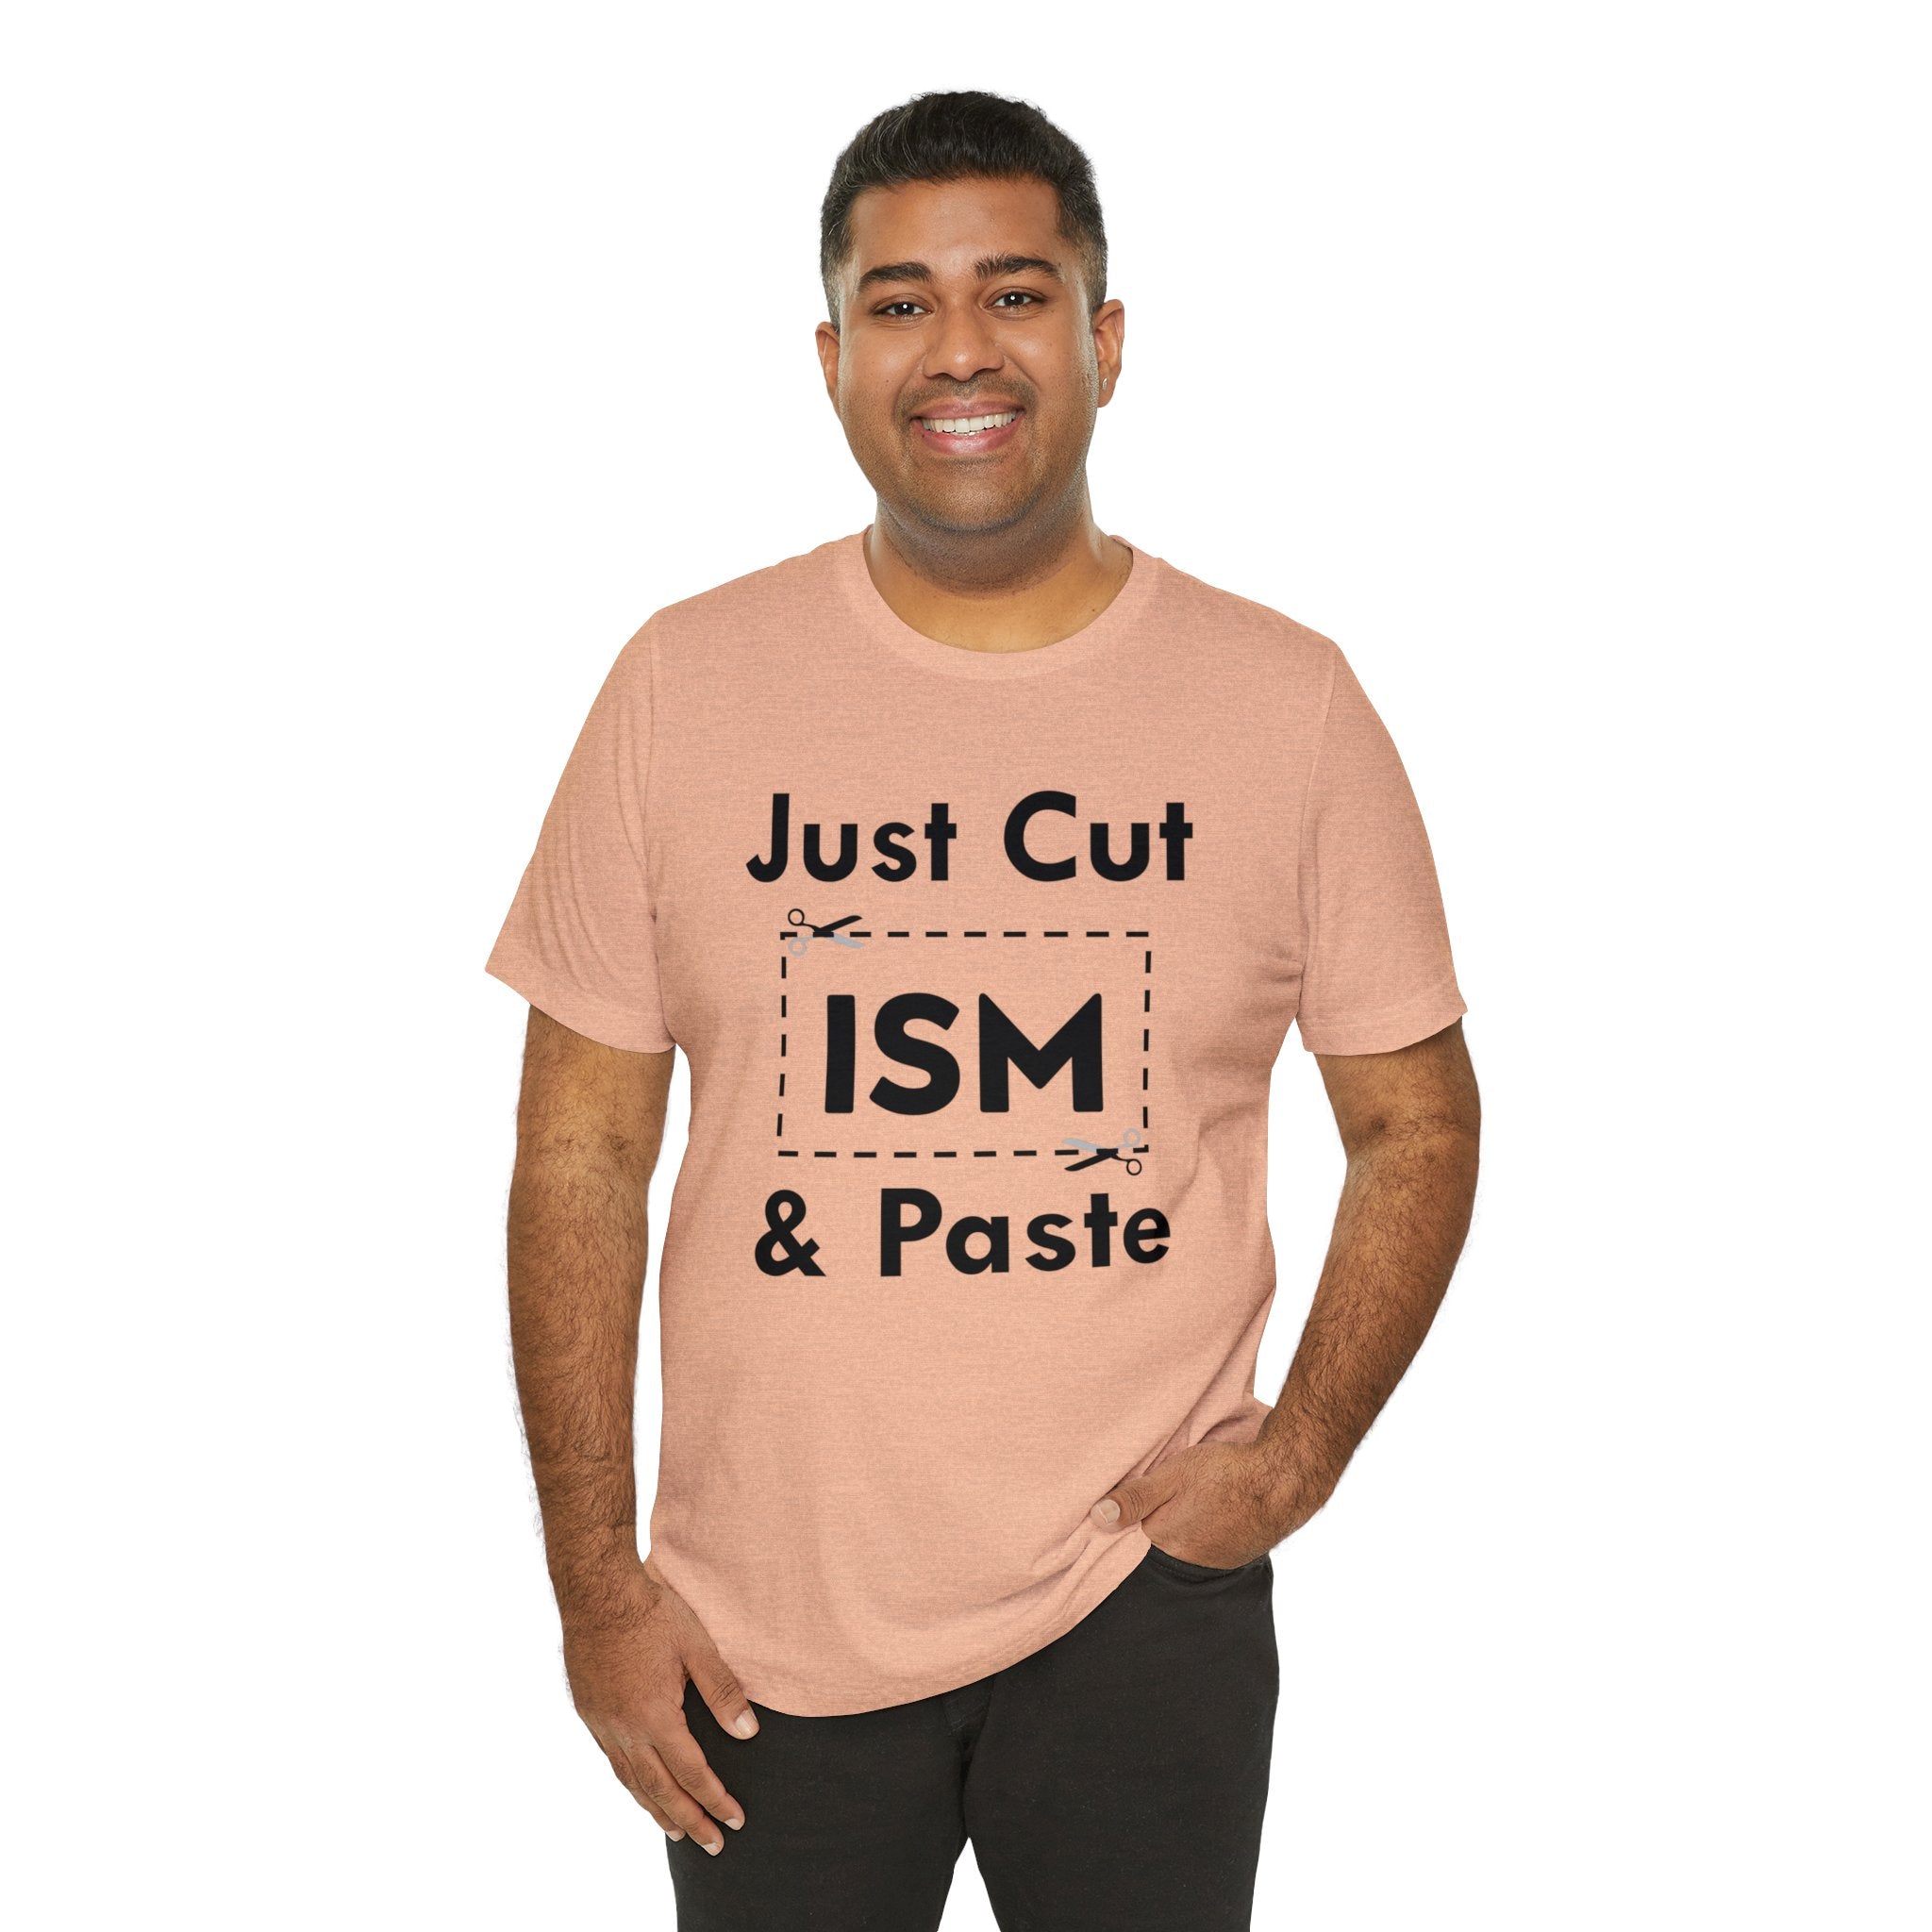 Just Cut & Paste - ISM